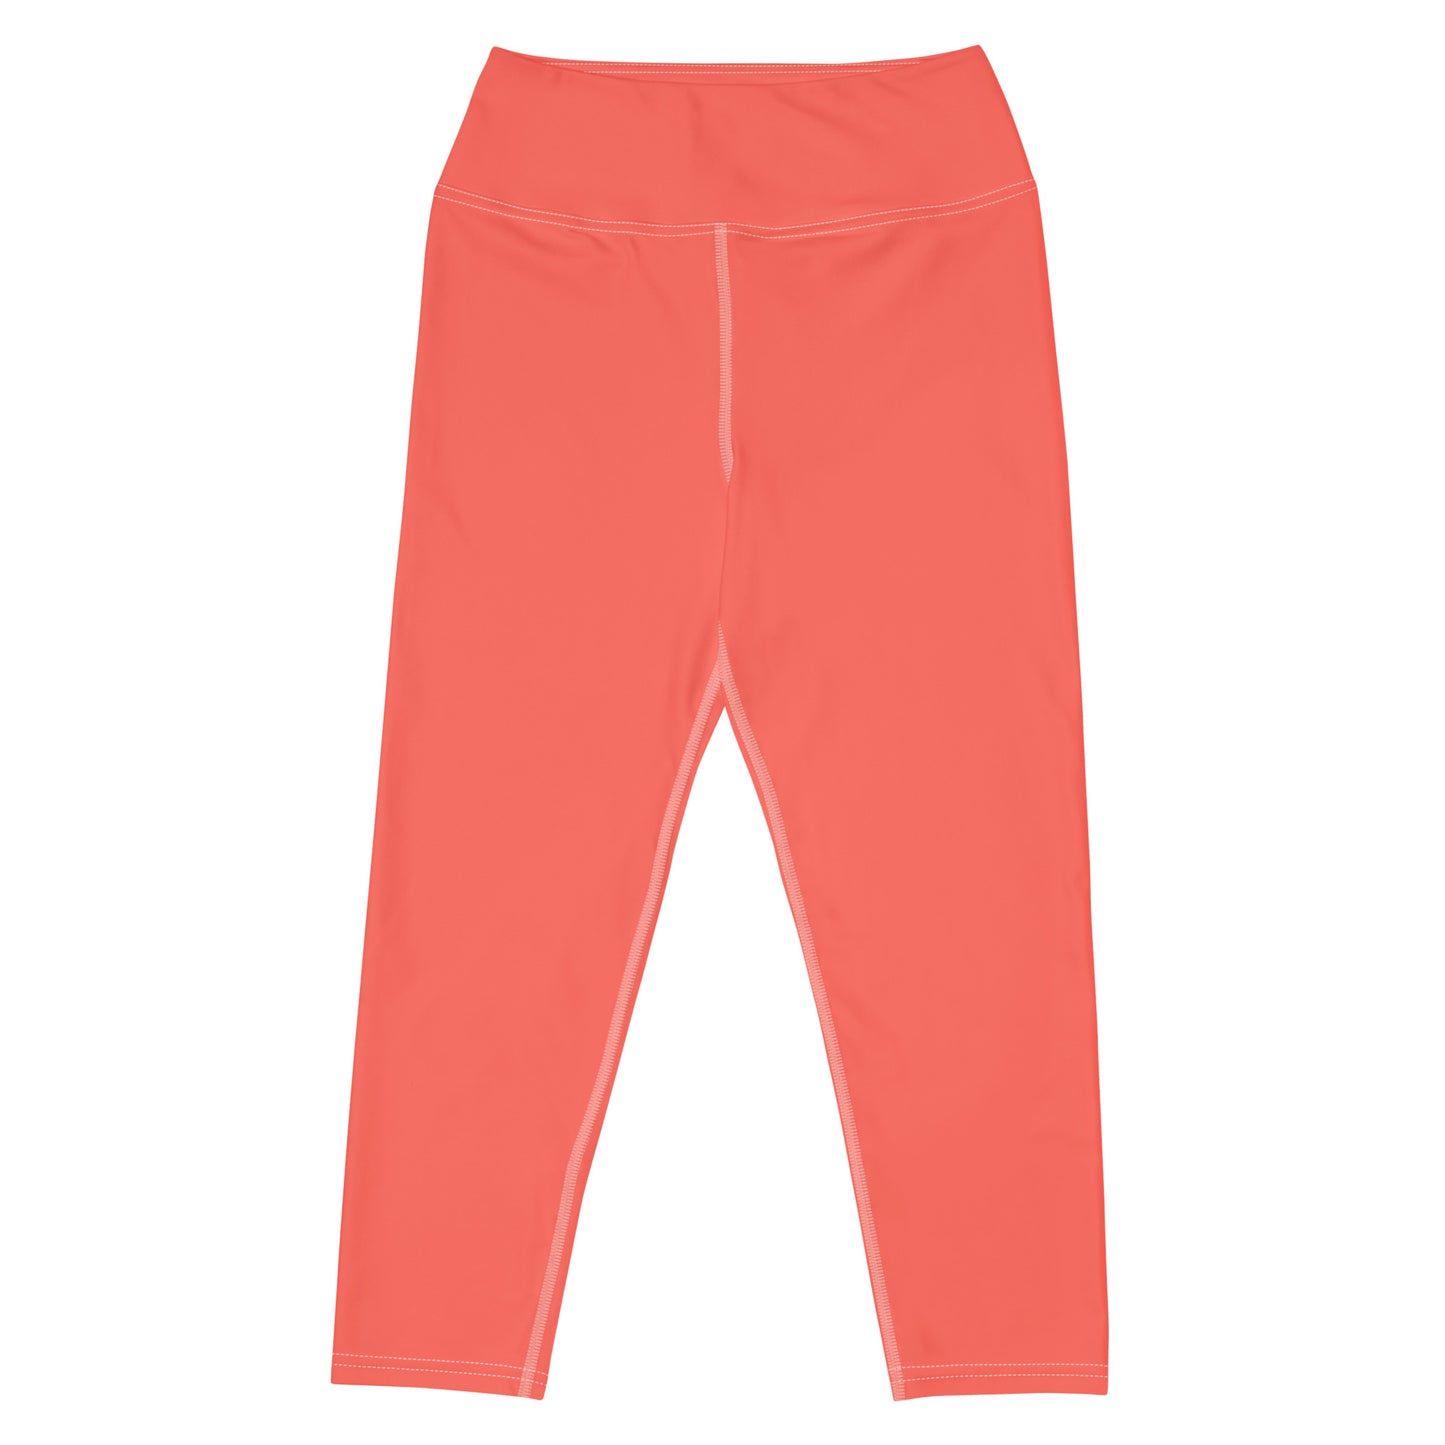 Coralo Solid Coral Capri High Waist Yoga Leggings / Pants with Inside Pocket